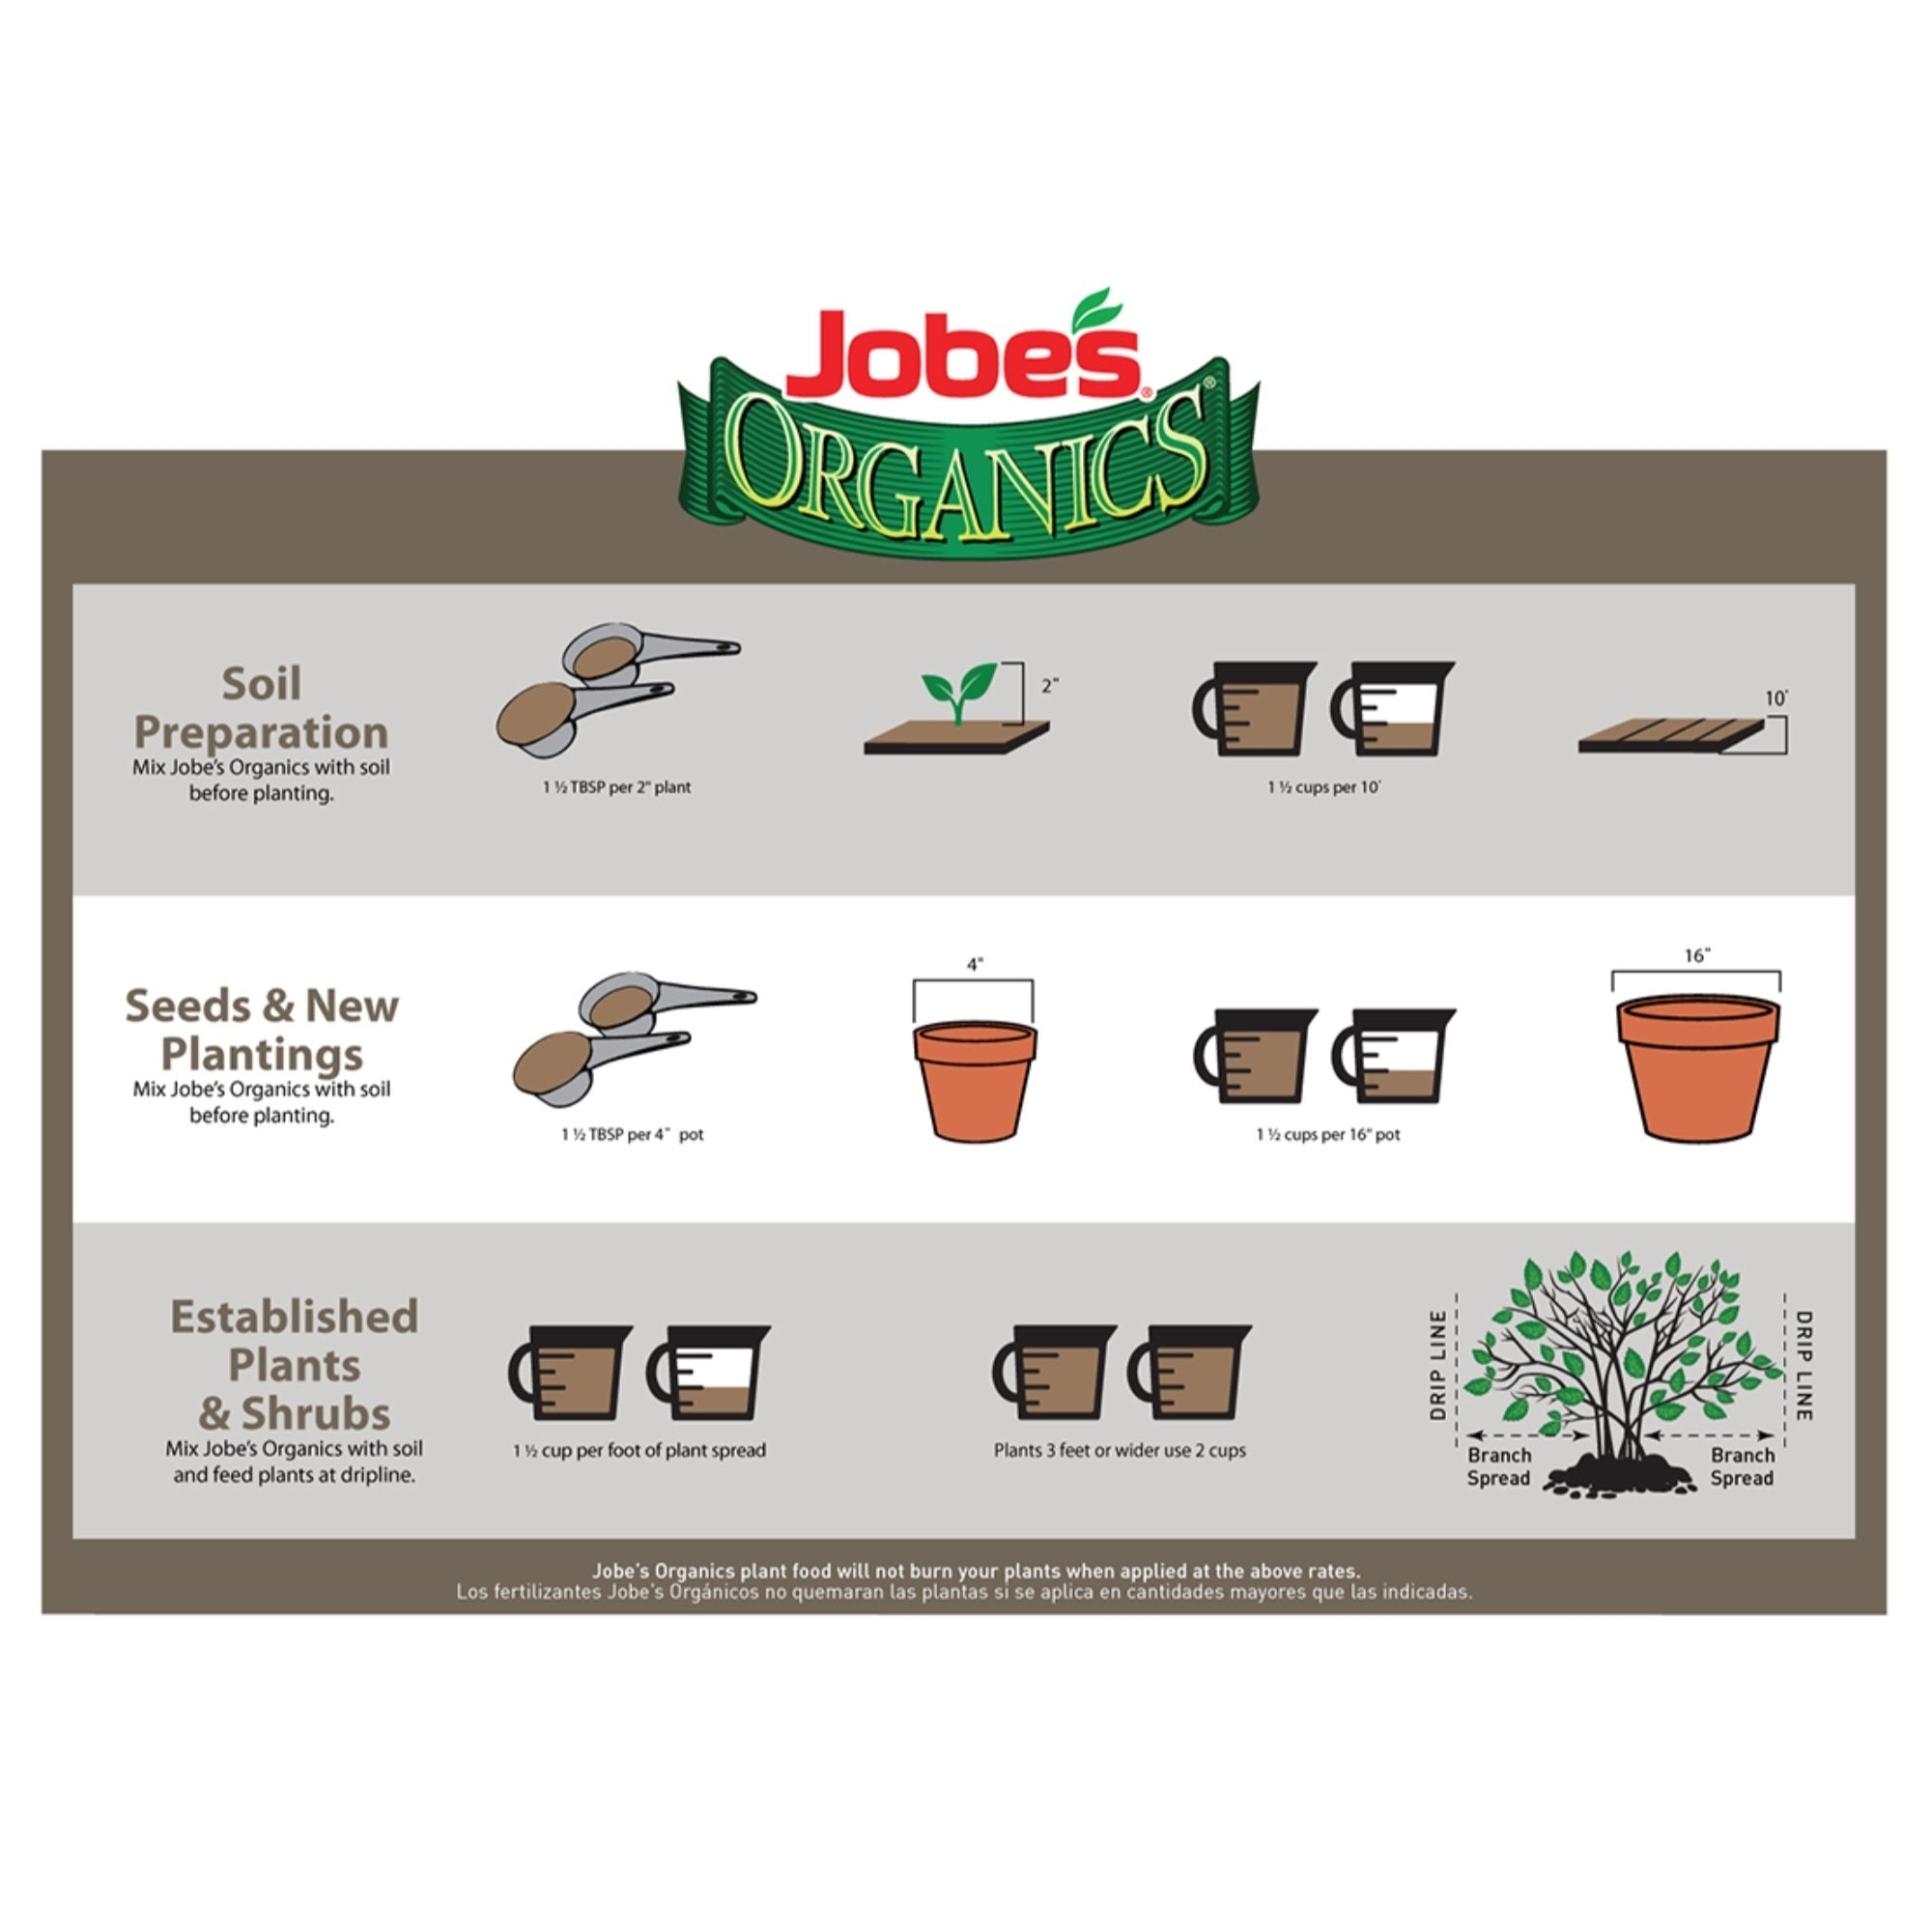 Jobe's Organics Vegetable and Tomato Granular Plant Food, 4lb